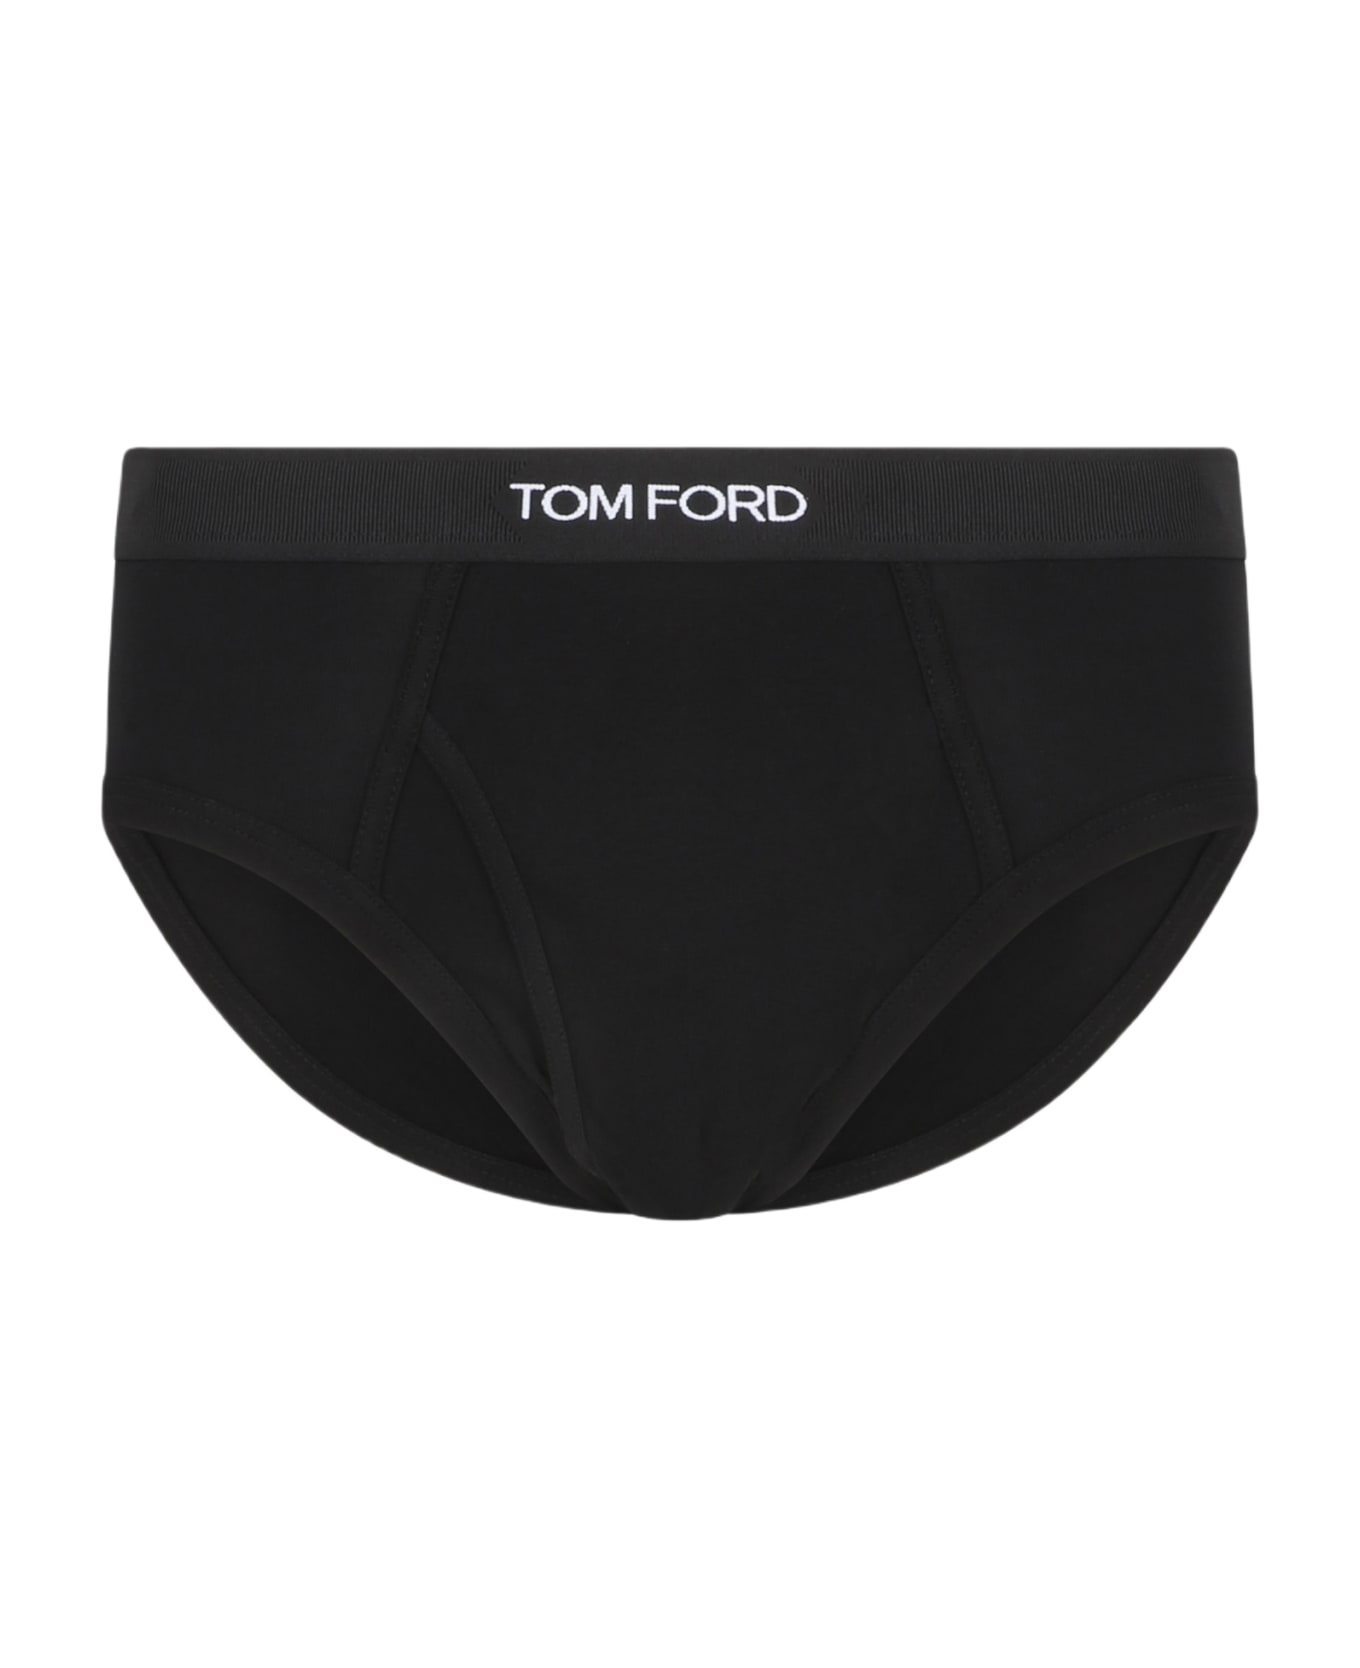 Tom Ford Intimo - Black